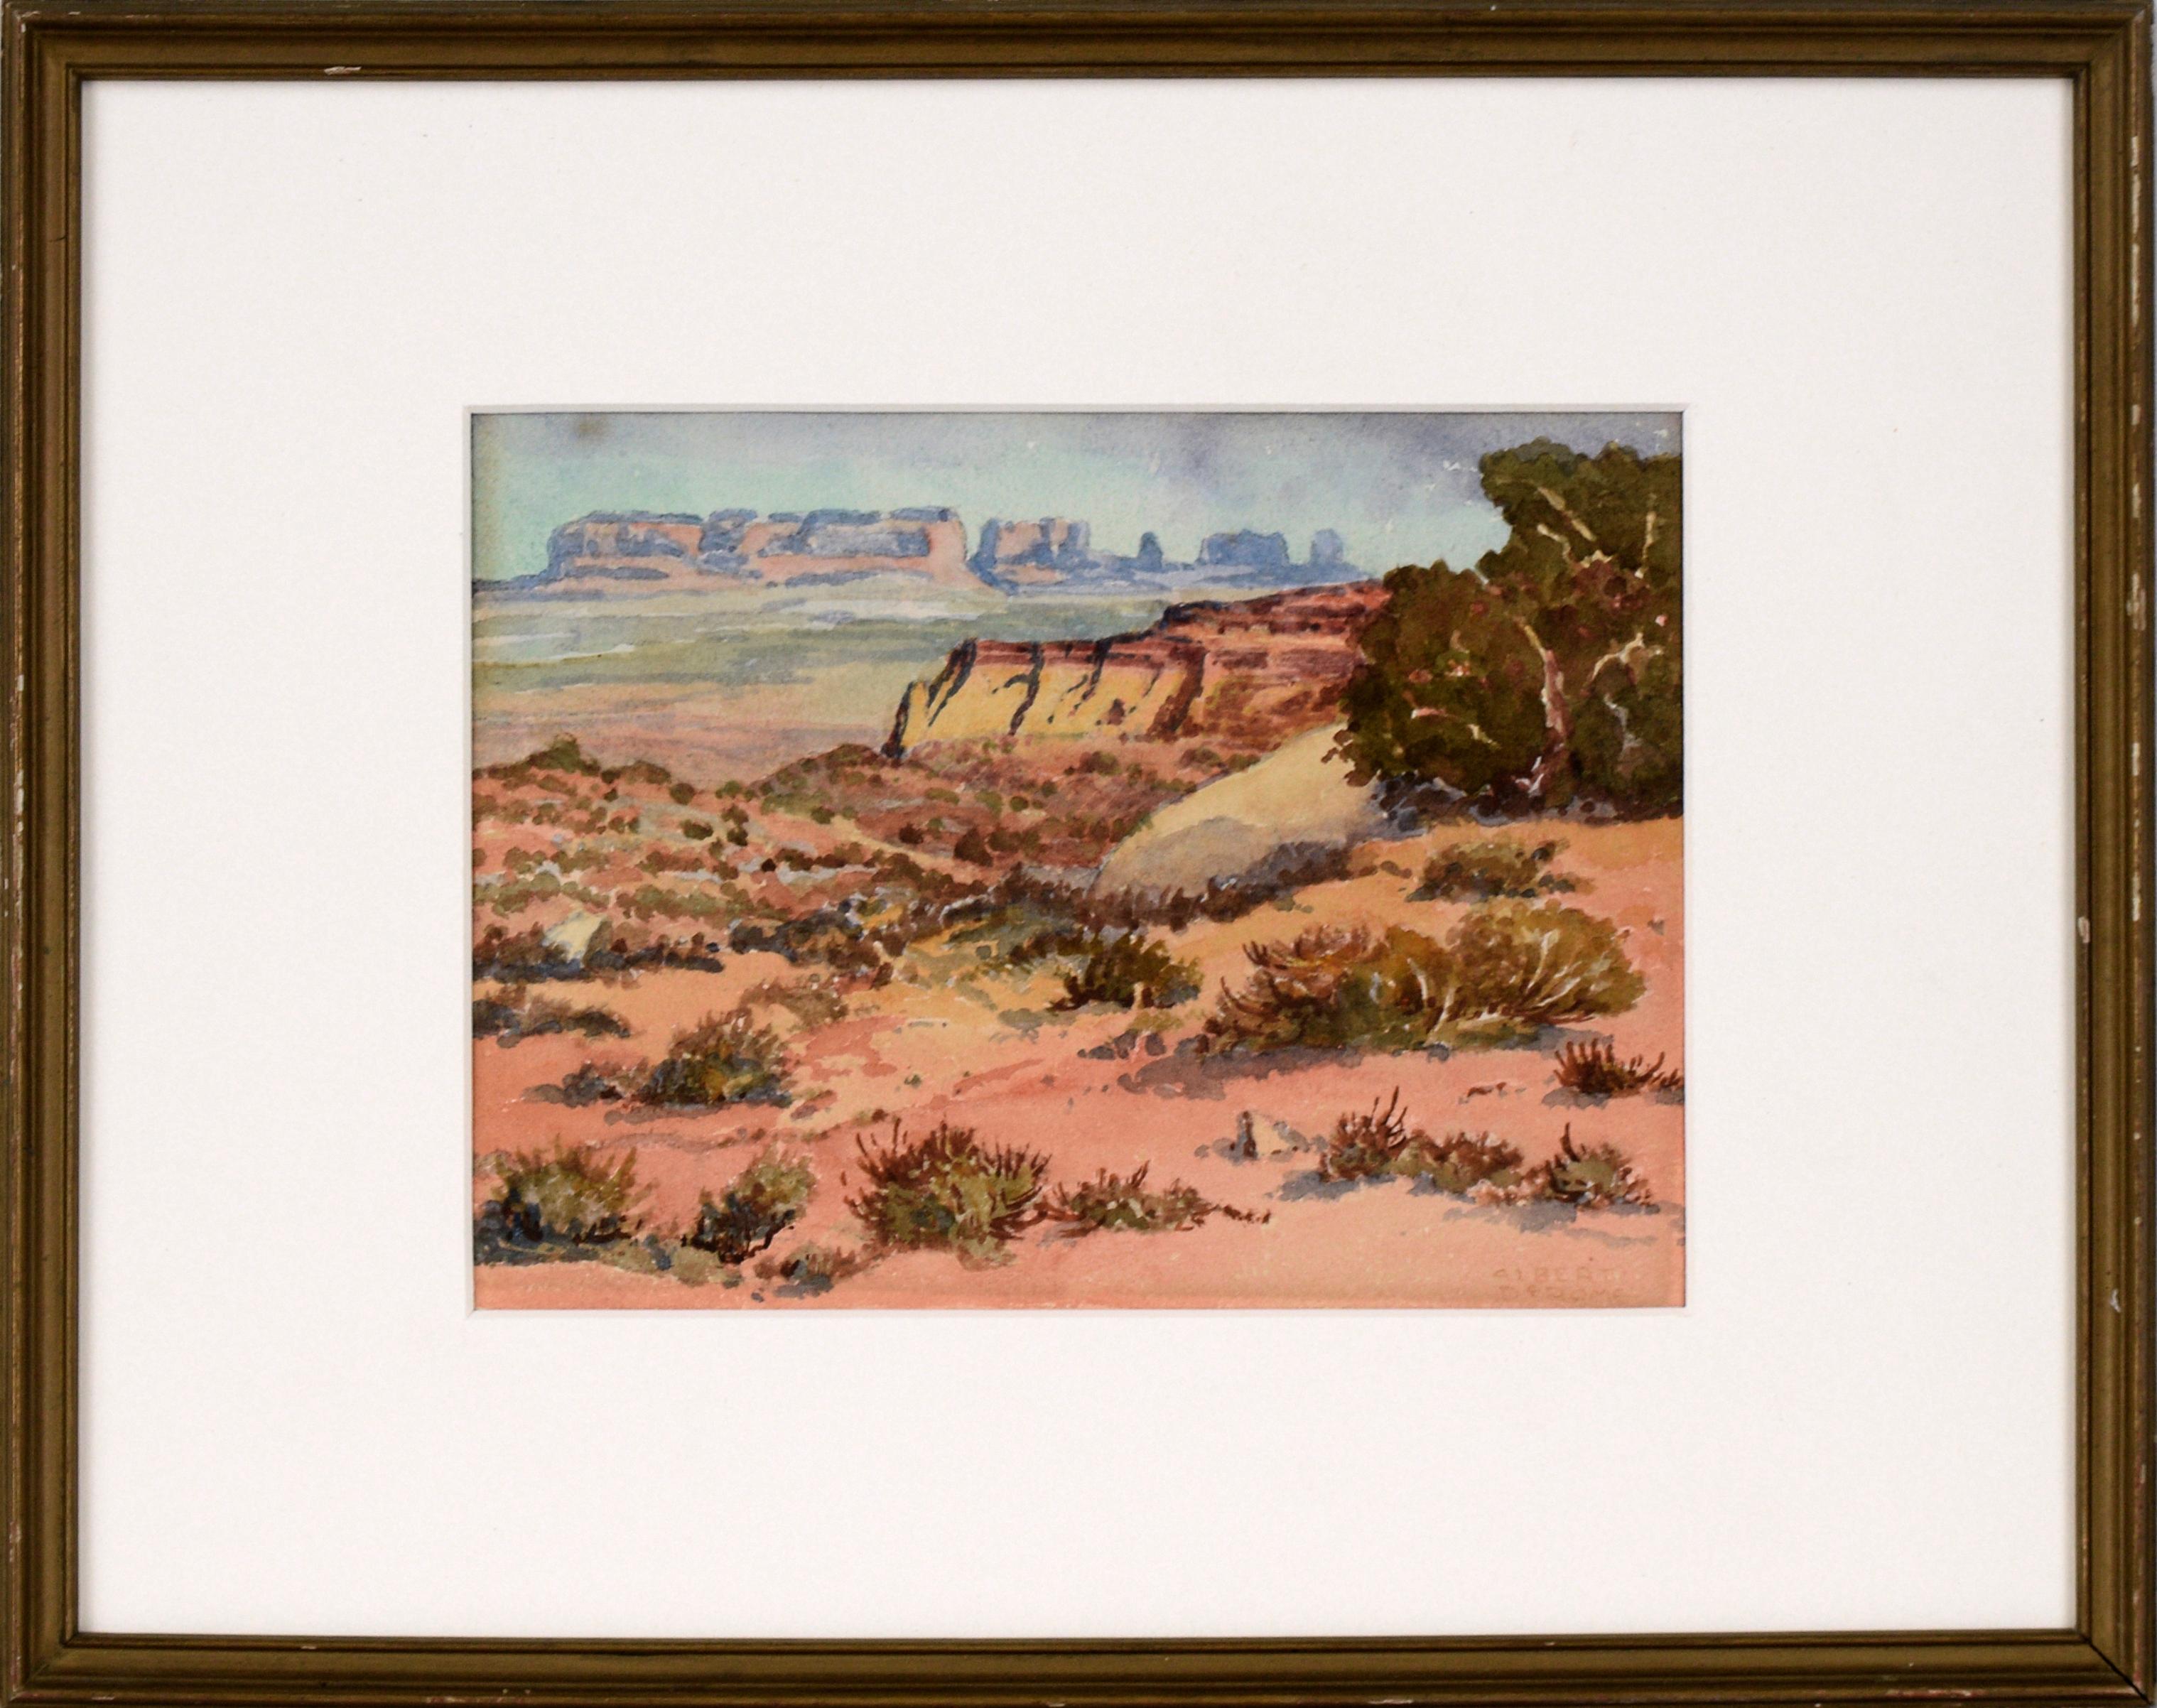 Albert DeRome Landscape Art - "Monument Valley Arizona" - Desert Landscape